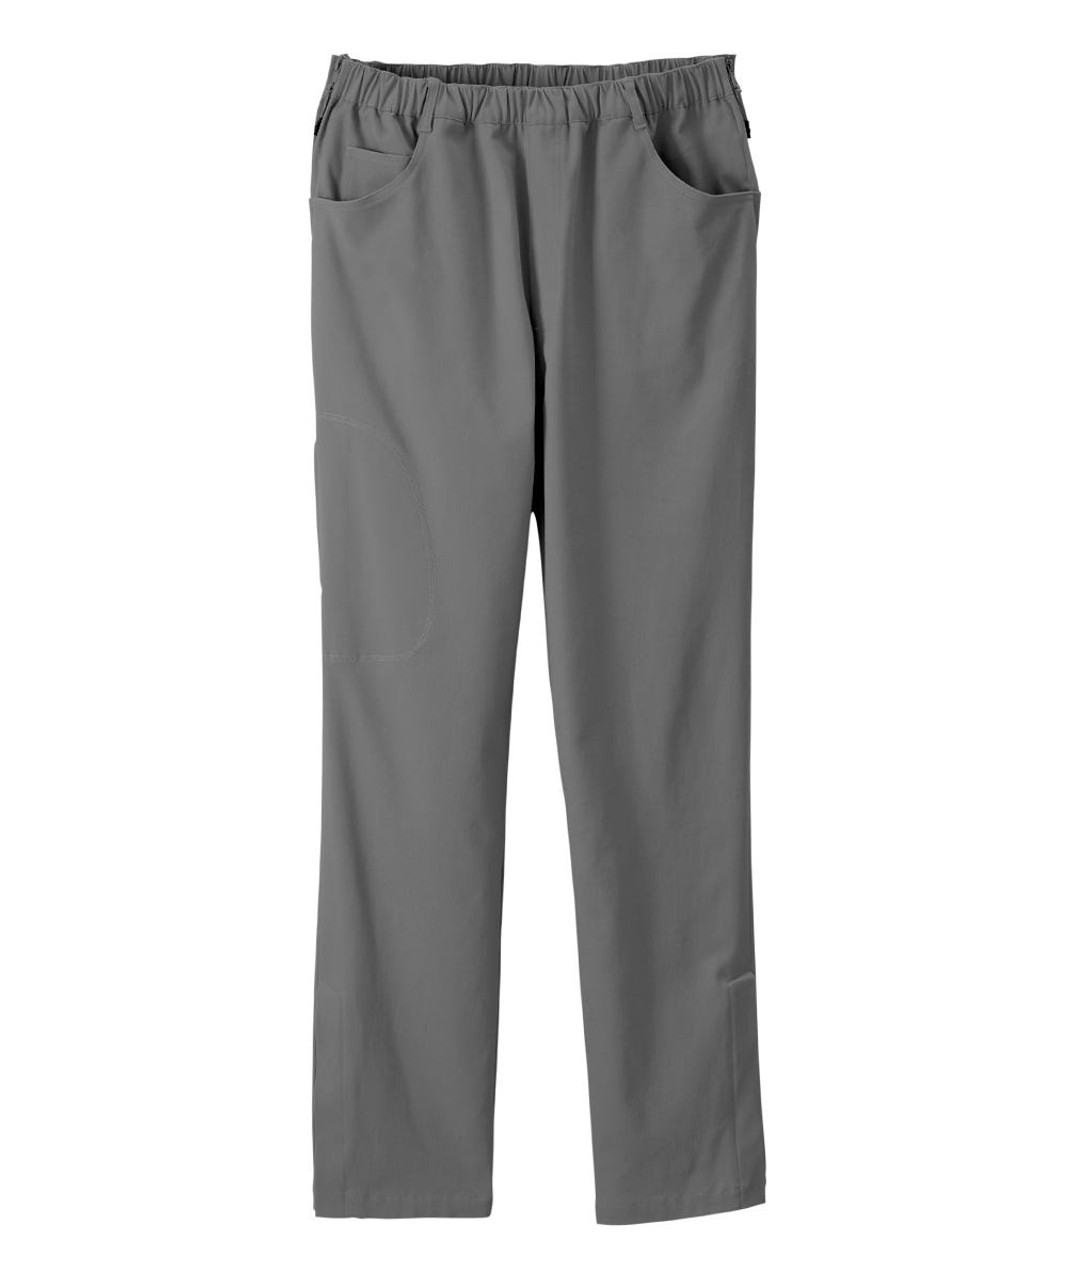 Silverts SV044 Senior Men's Side Zip Adaptive Pant Grey, Size=2XL, SV044-SV18-2XL